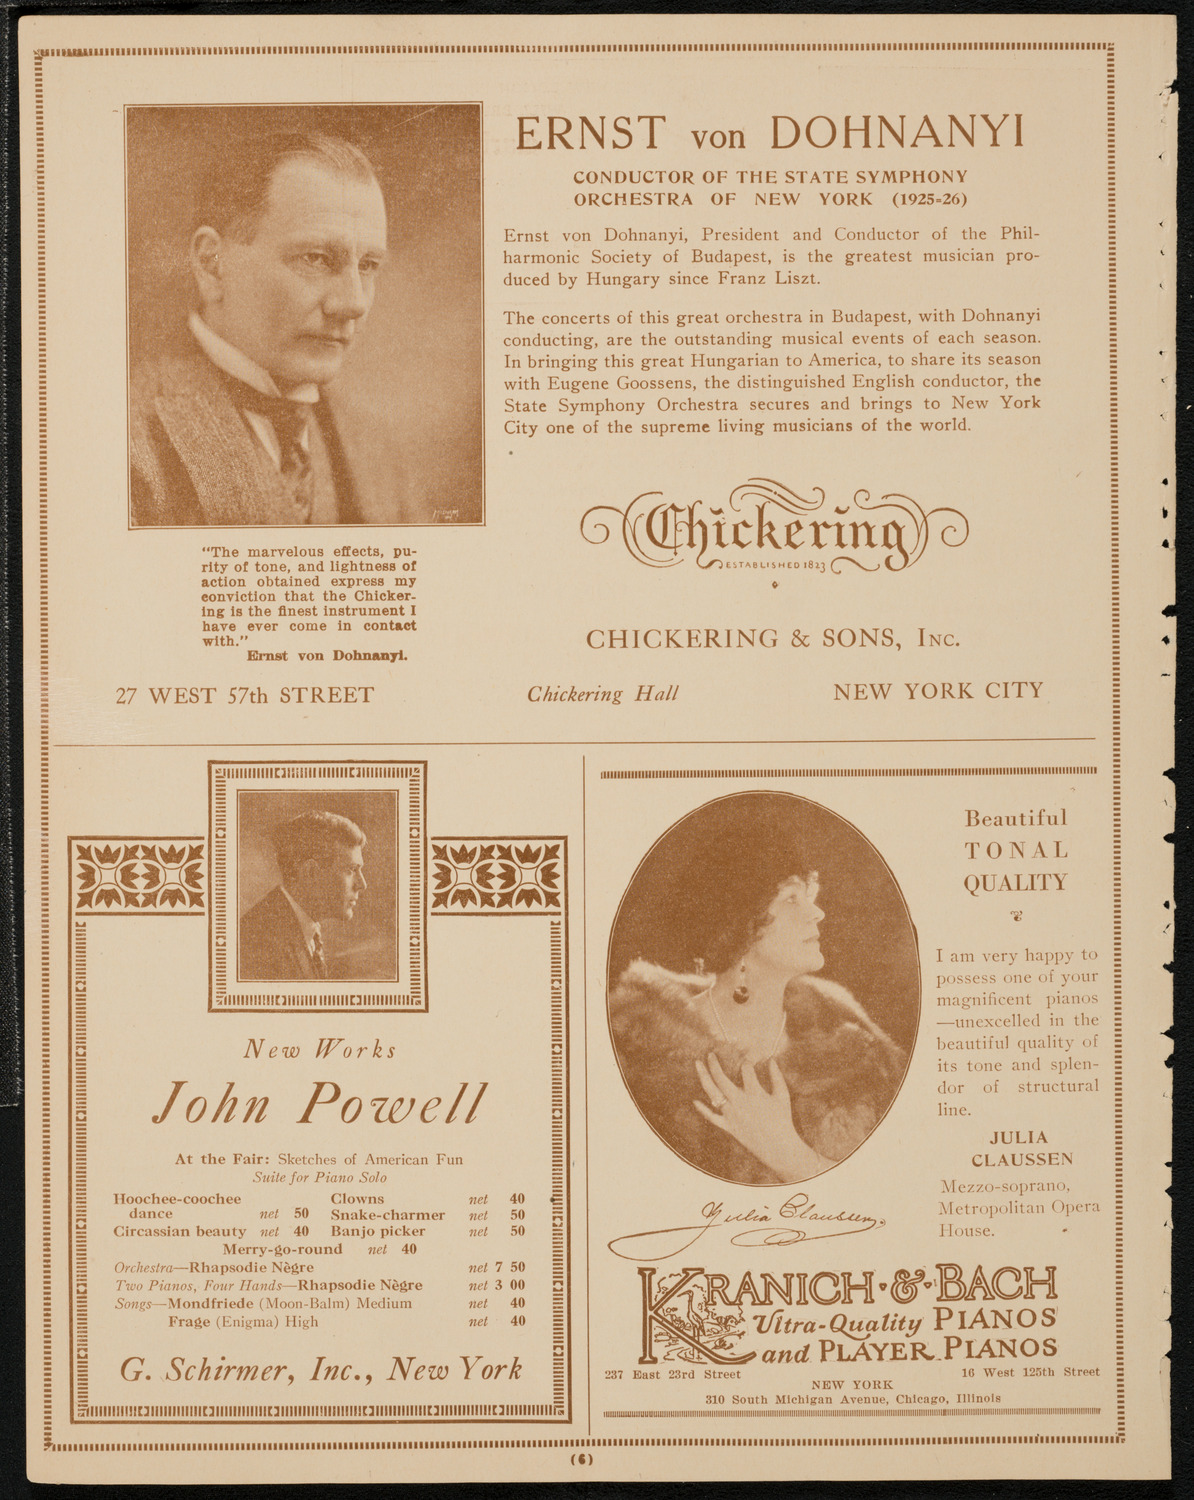 Stockholm University Singers, June 4, 1925, program page 6